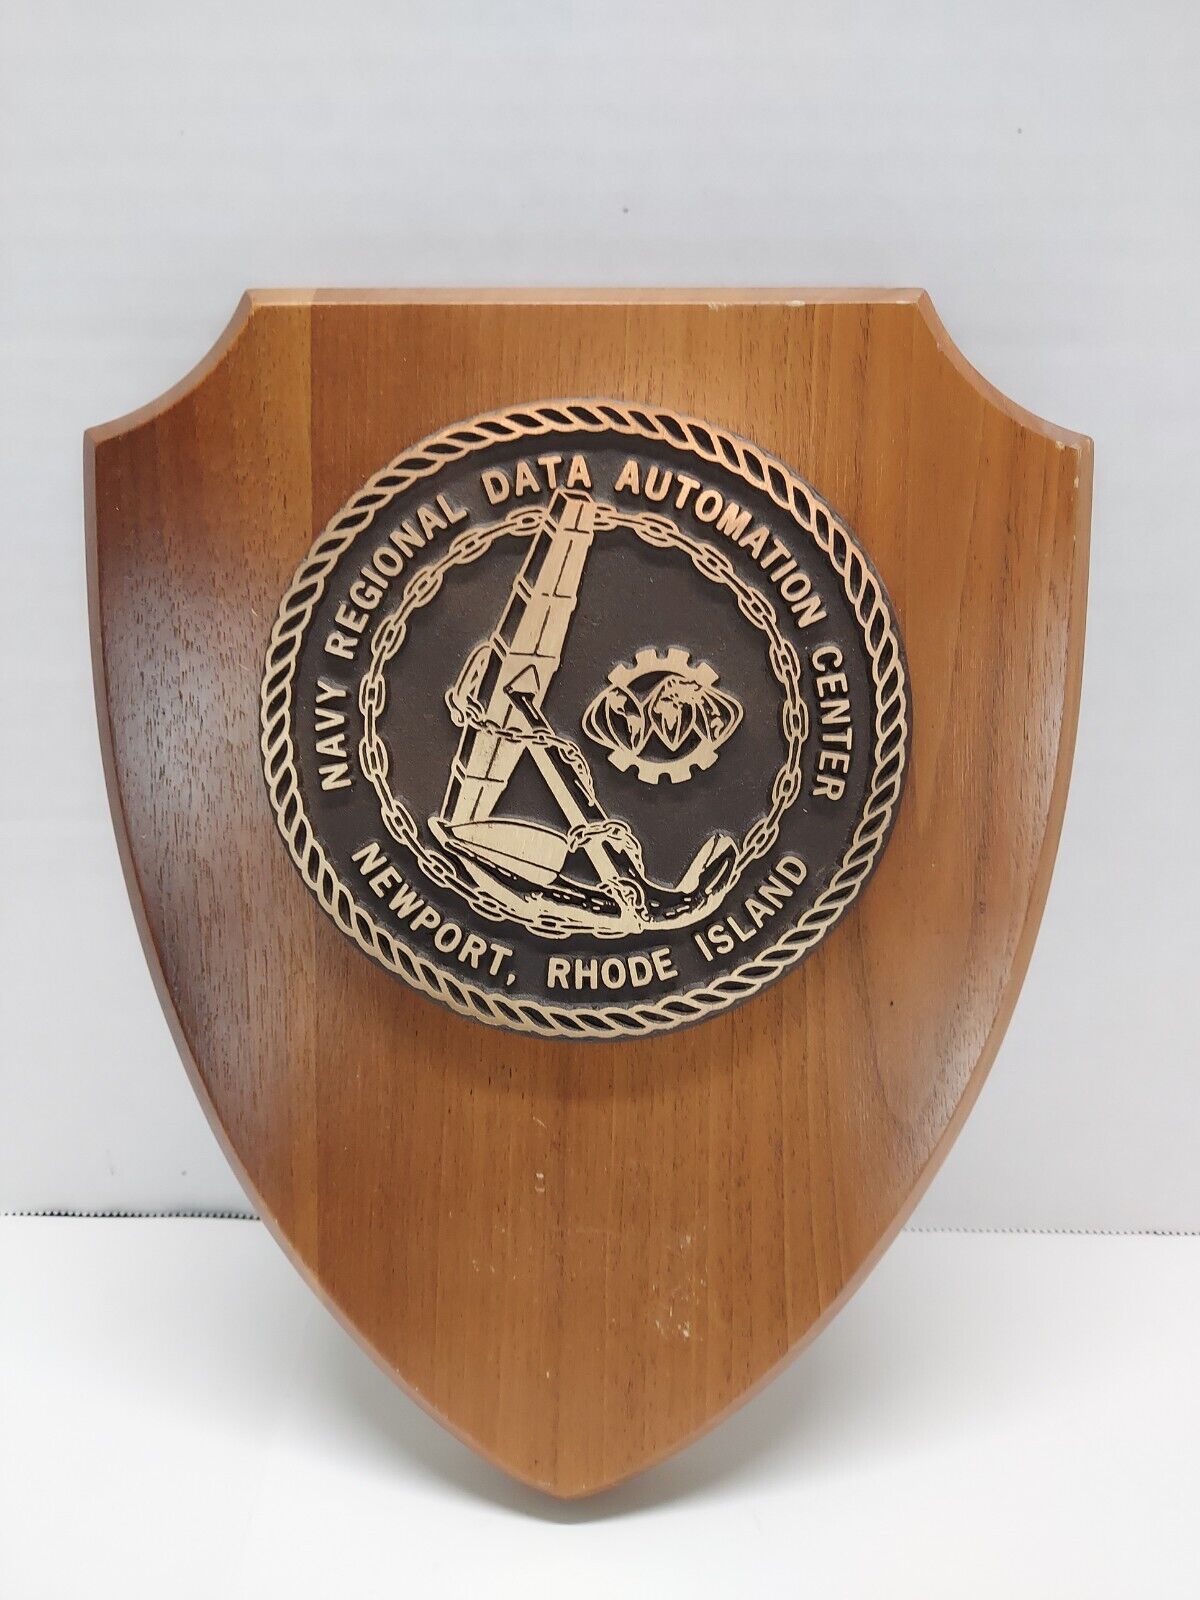 Rare USA Navy U.S. Data automation Newport RI Plaque On Wood medal 